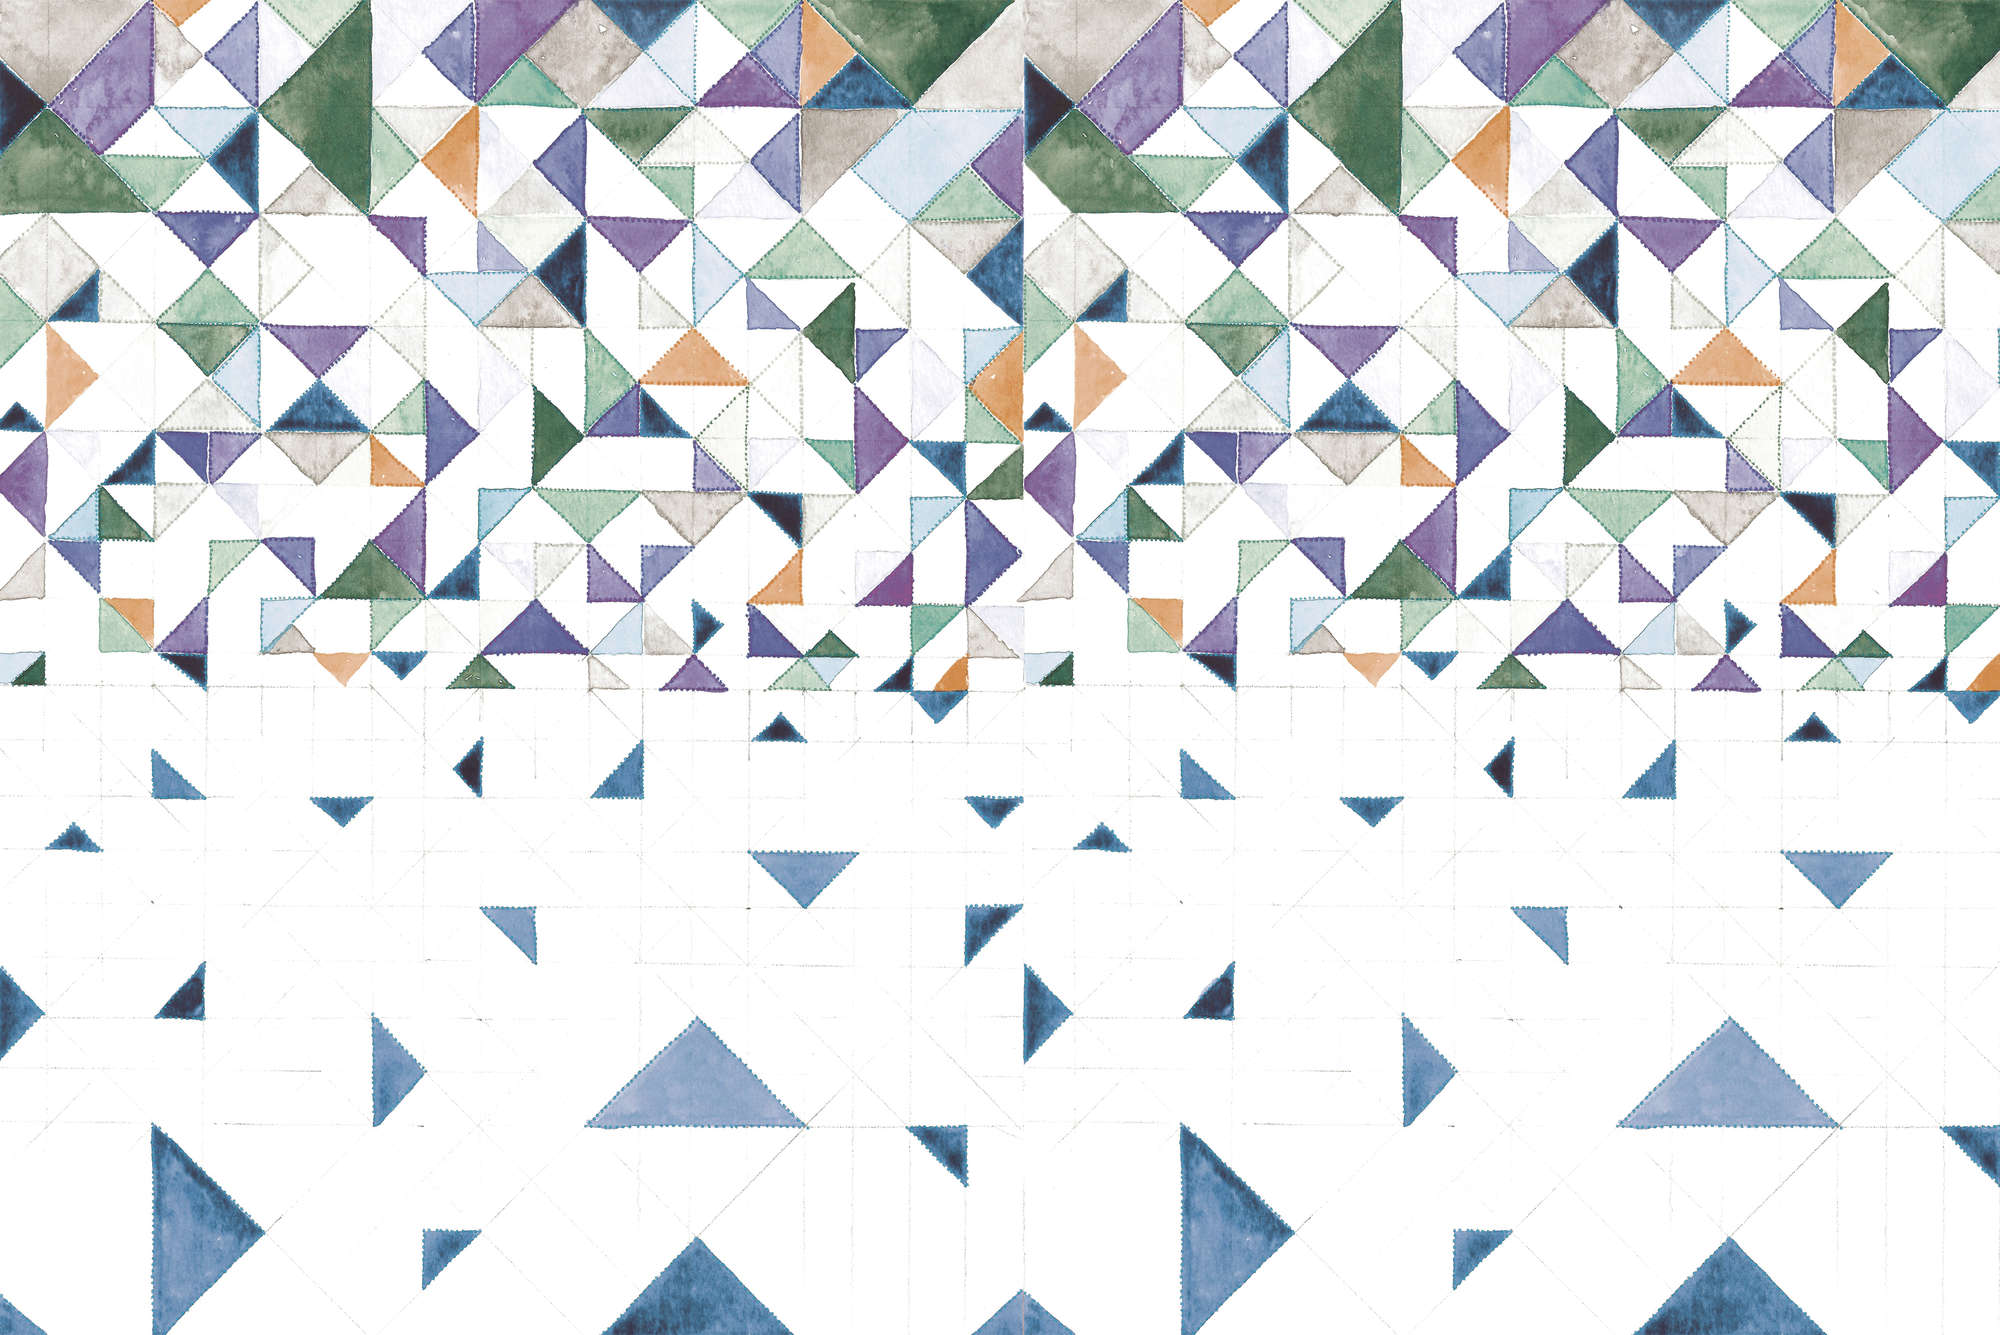             Grafik Fototapete mit Dreieck Muster auf Premium Glattvlies
        